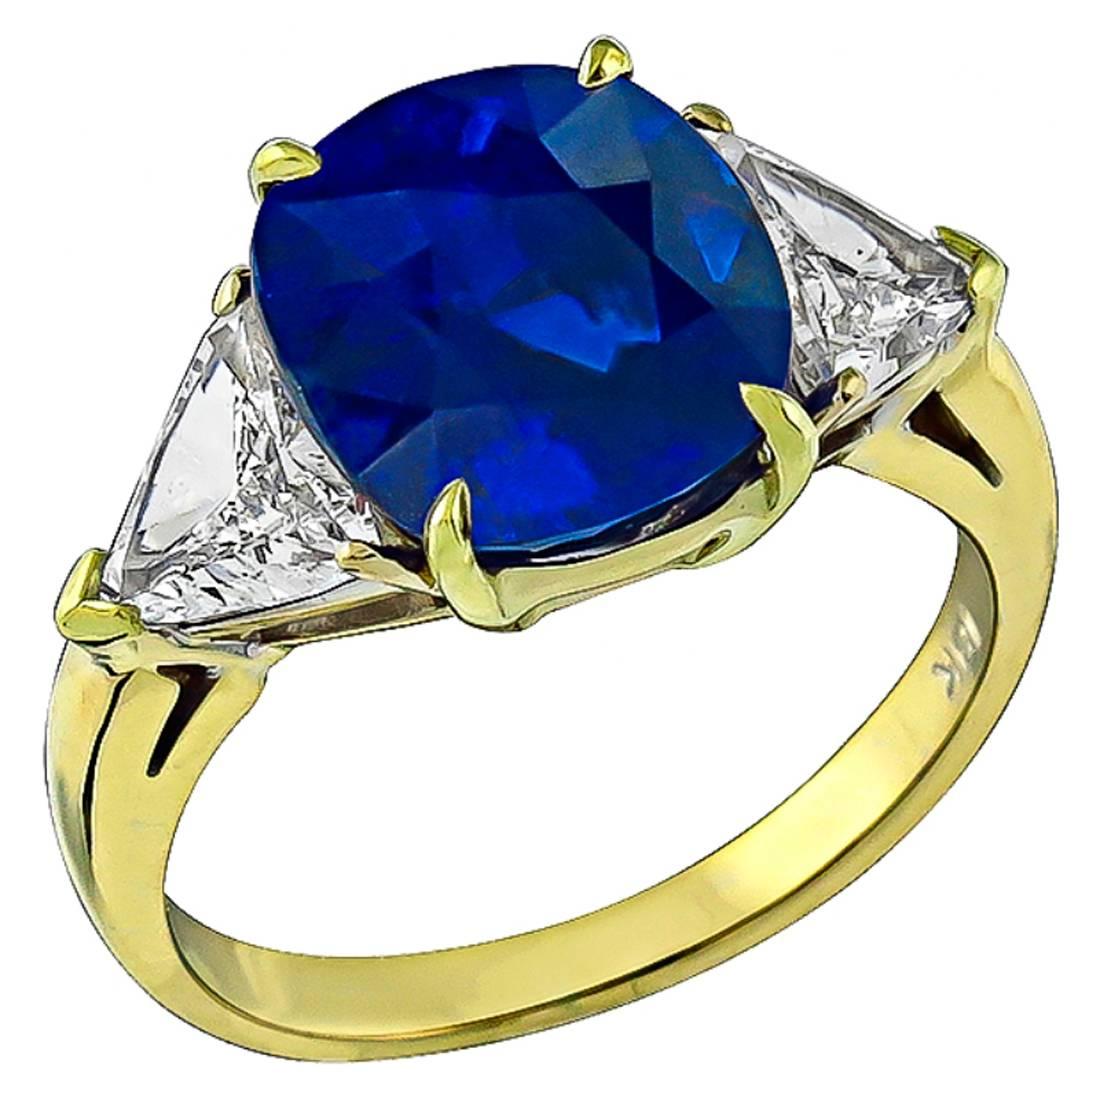 Stunning 5.28 Carat Cushion Cut Sapphire Diamond Gold Engagement Ring